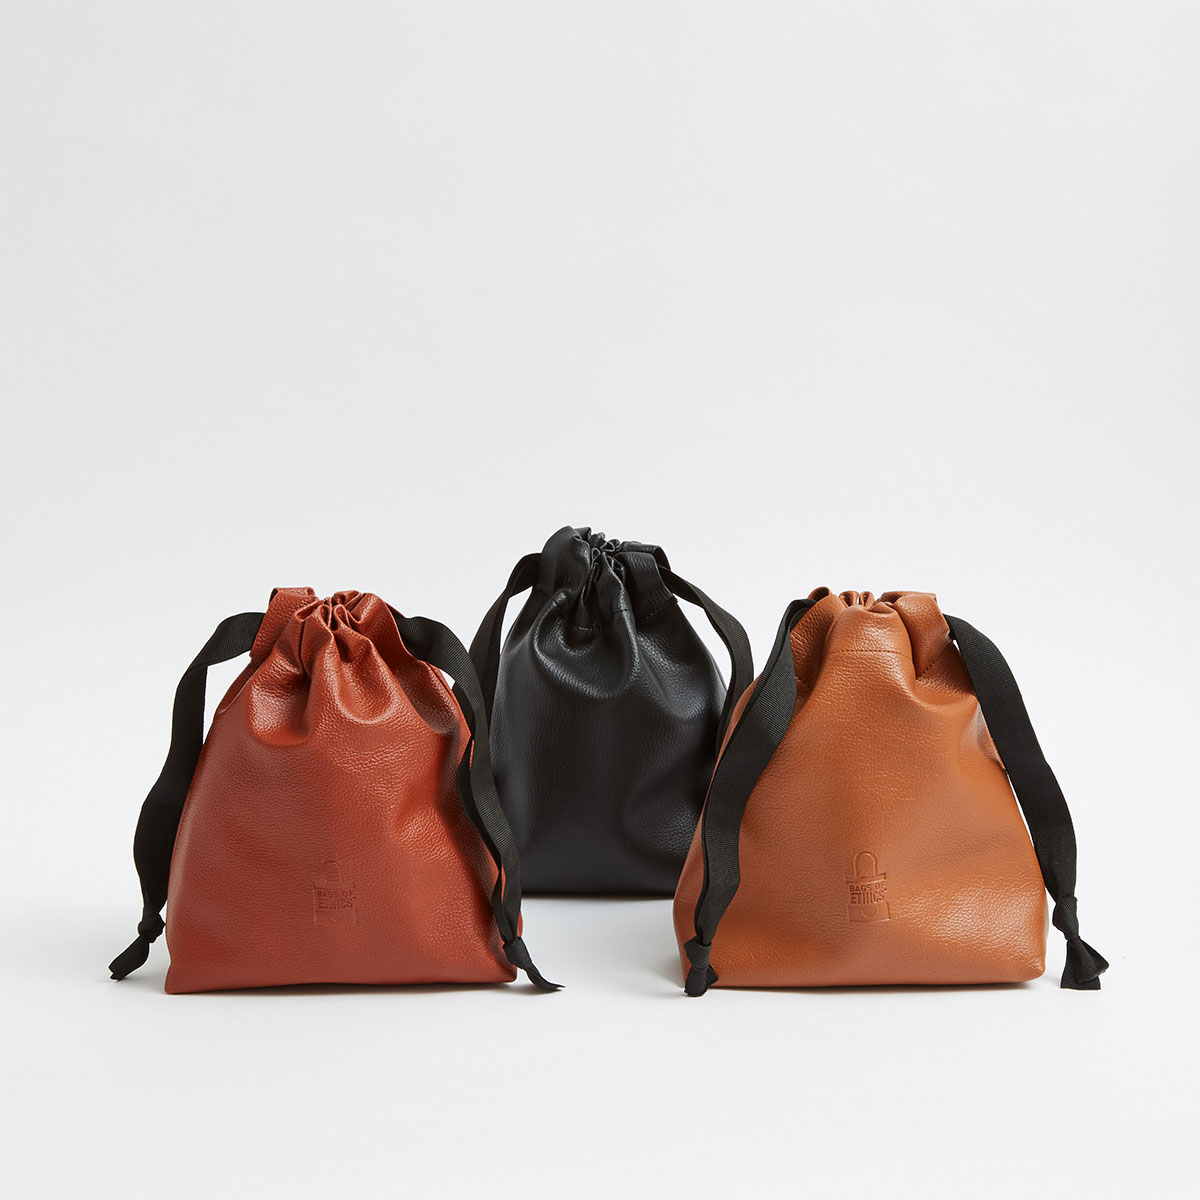 Vegan leather handbag